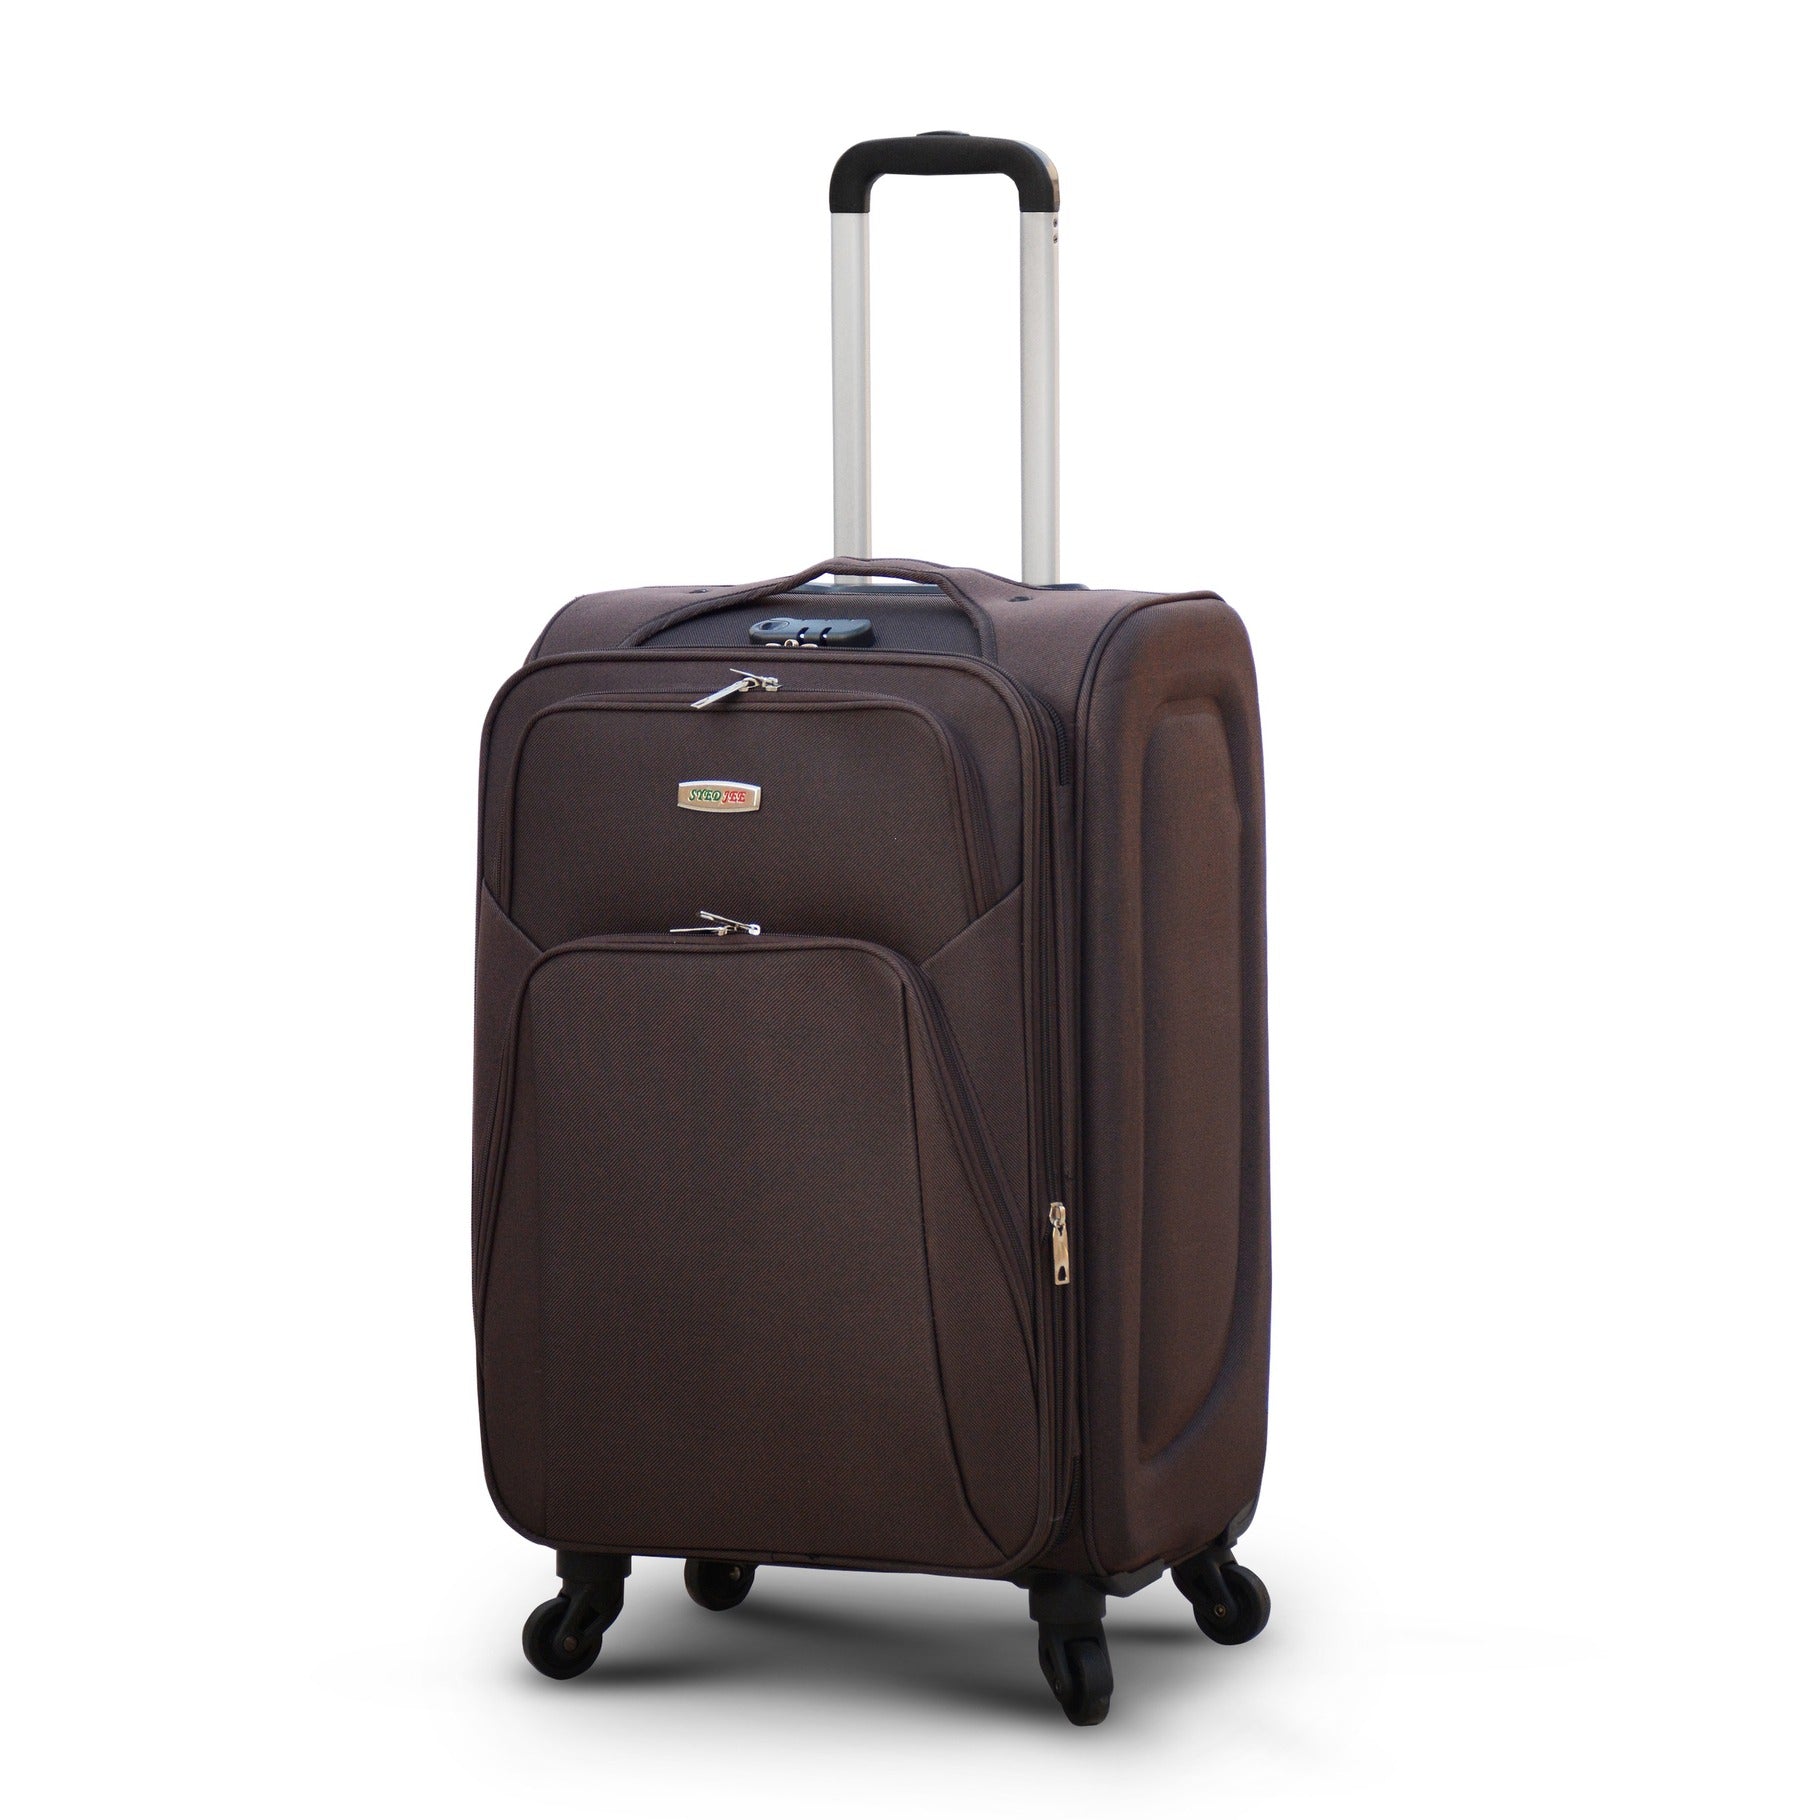 24" Coffee Colour SJ JIAN 4 Wheel Luggage Lightweight Soft Material Trolley Bag